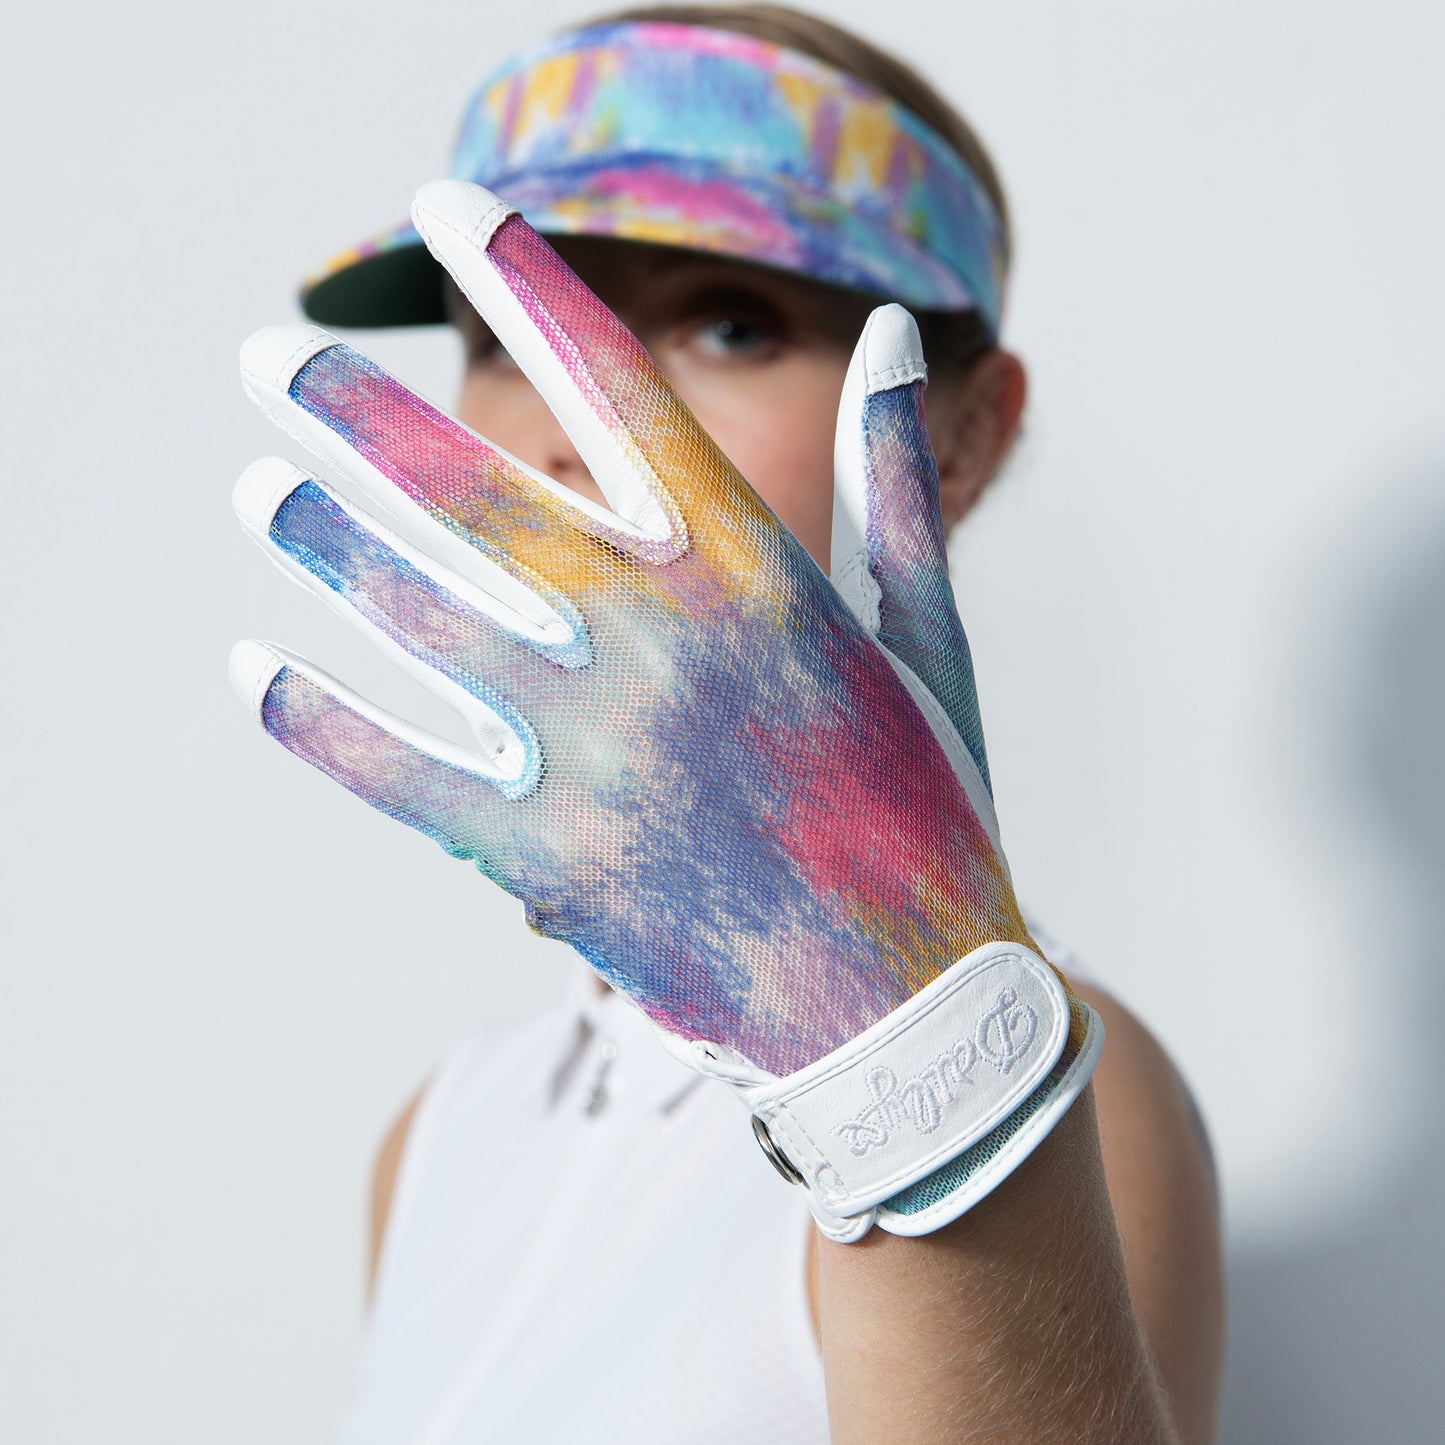 Daily Sports Ladies Vision Sun Glove in a Multicoloured Brushstroke Print